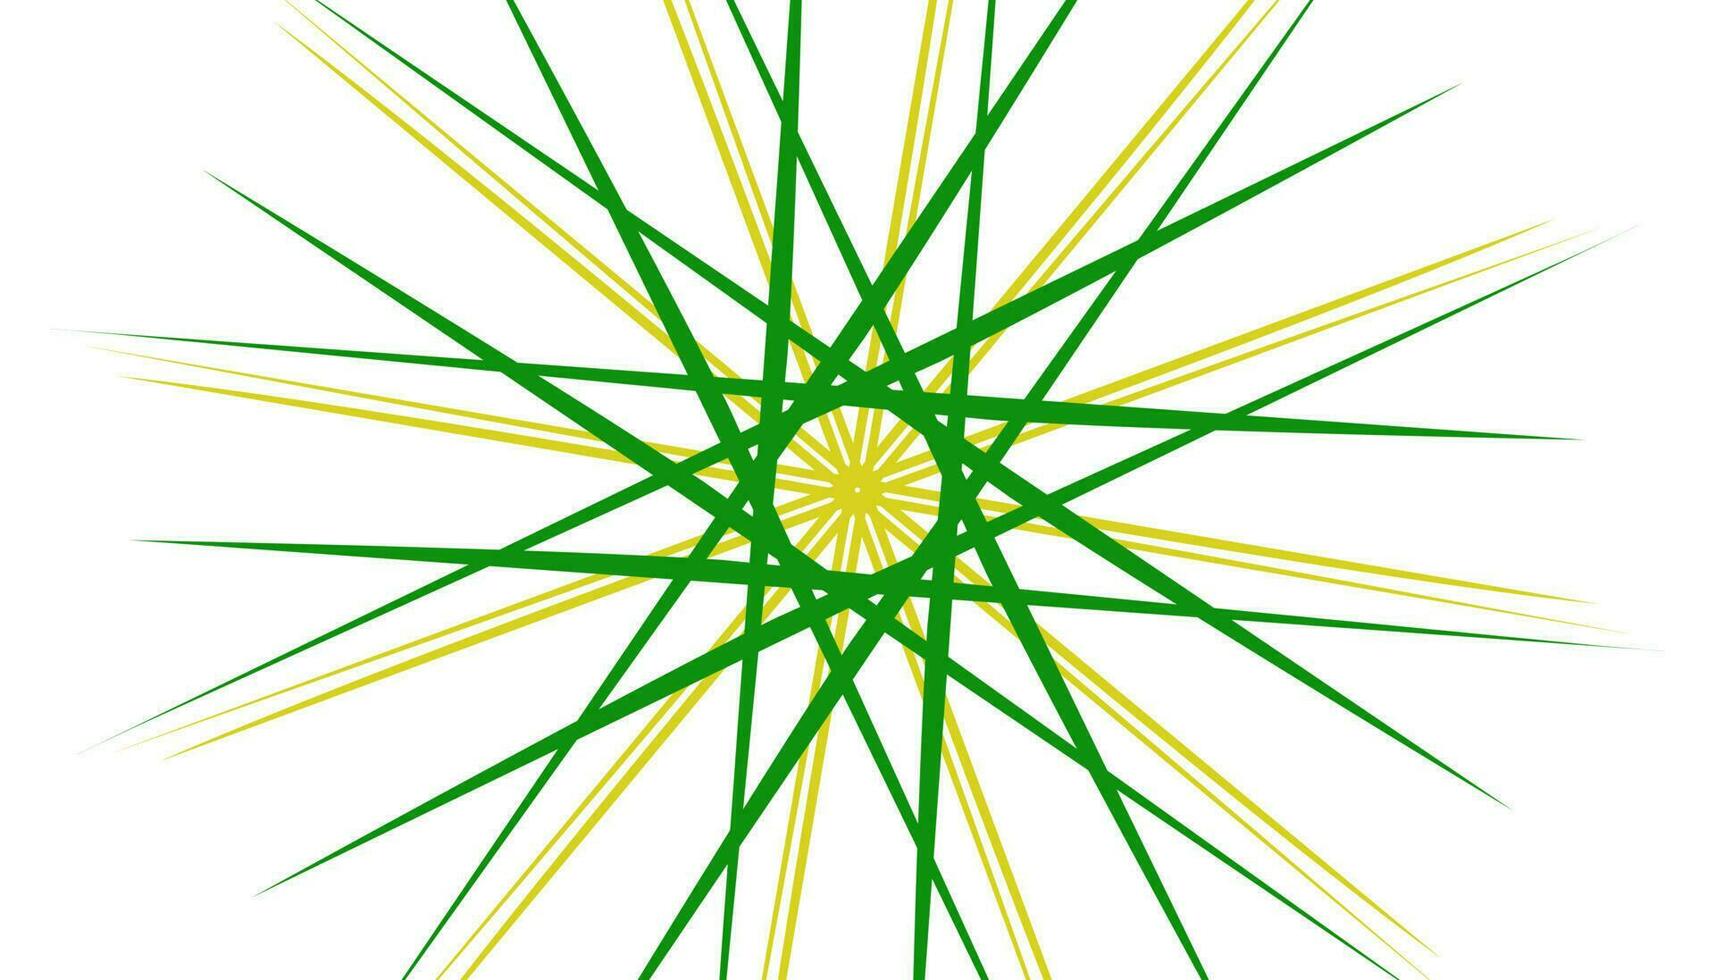 illustration av ett abstrakt bakgrund i nyanser av grön vektor